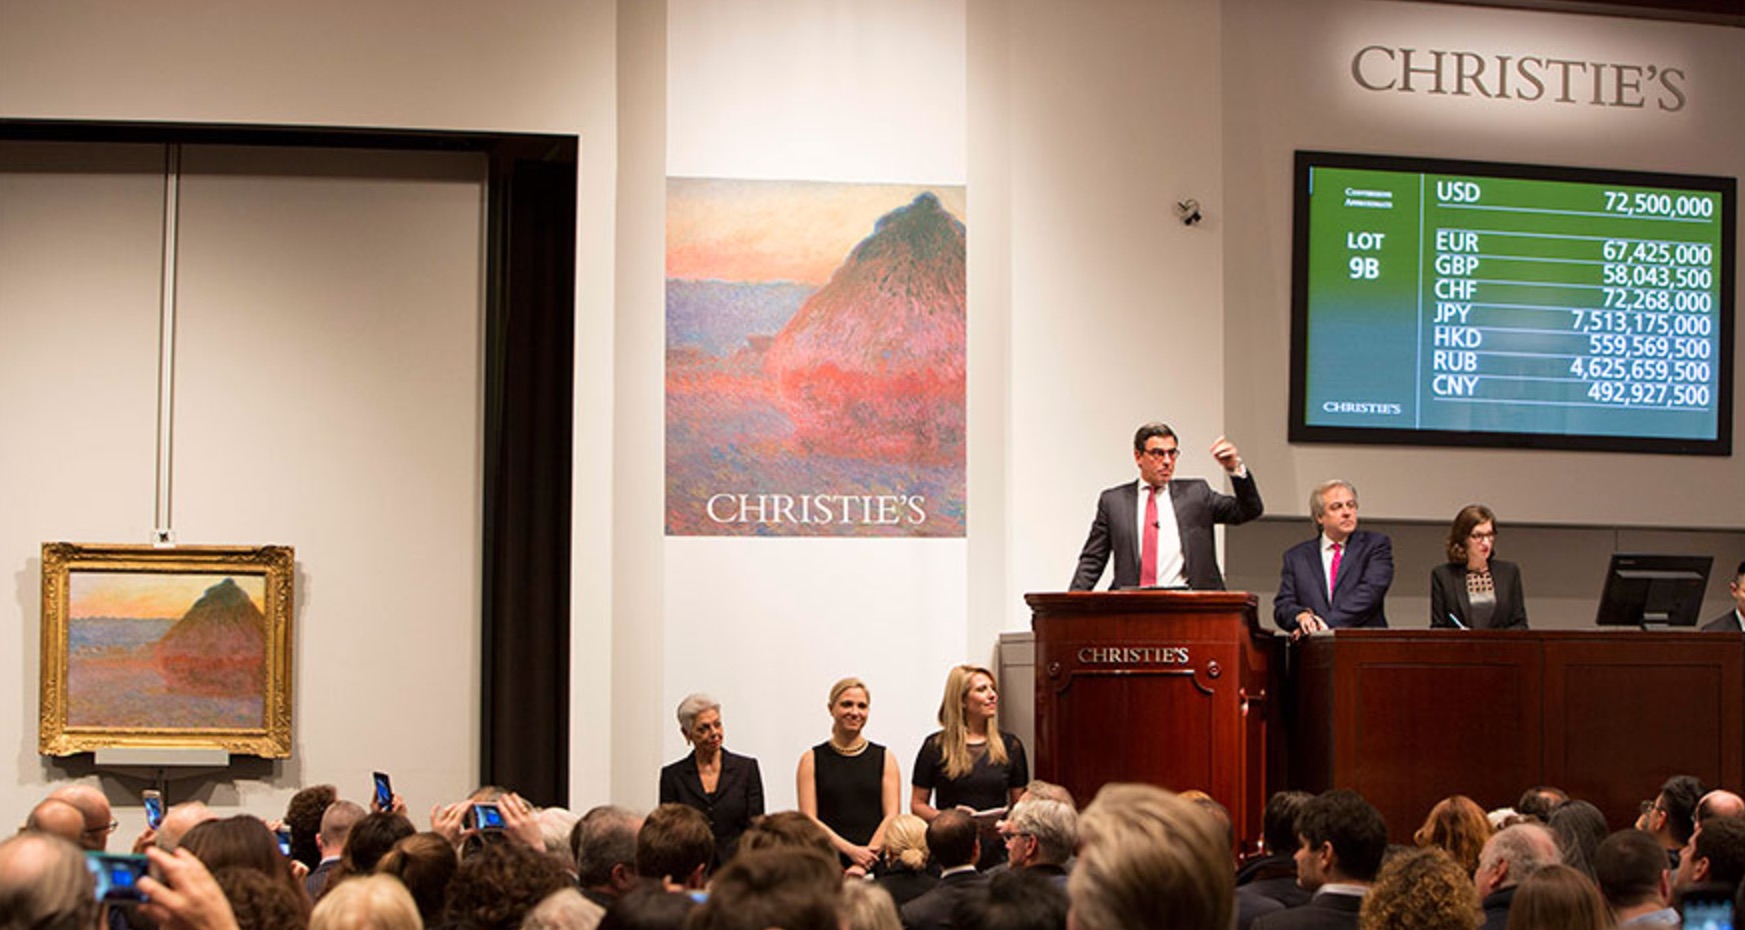 Christie's New York, dražba Monetova obrazu Meule, 16. 11. 2016